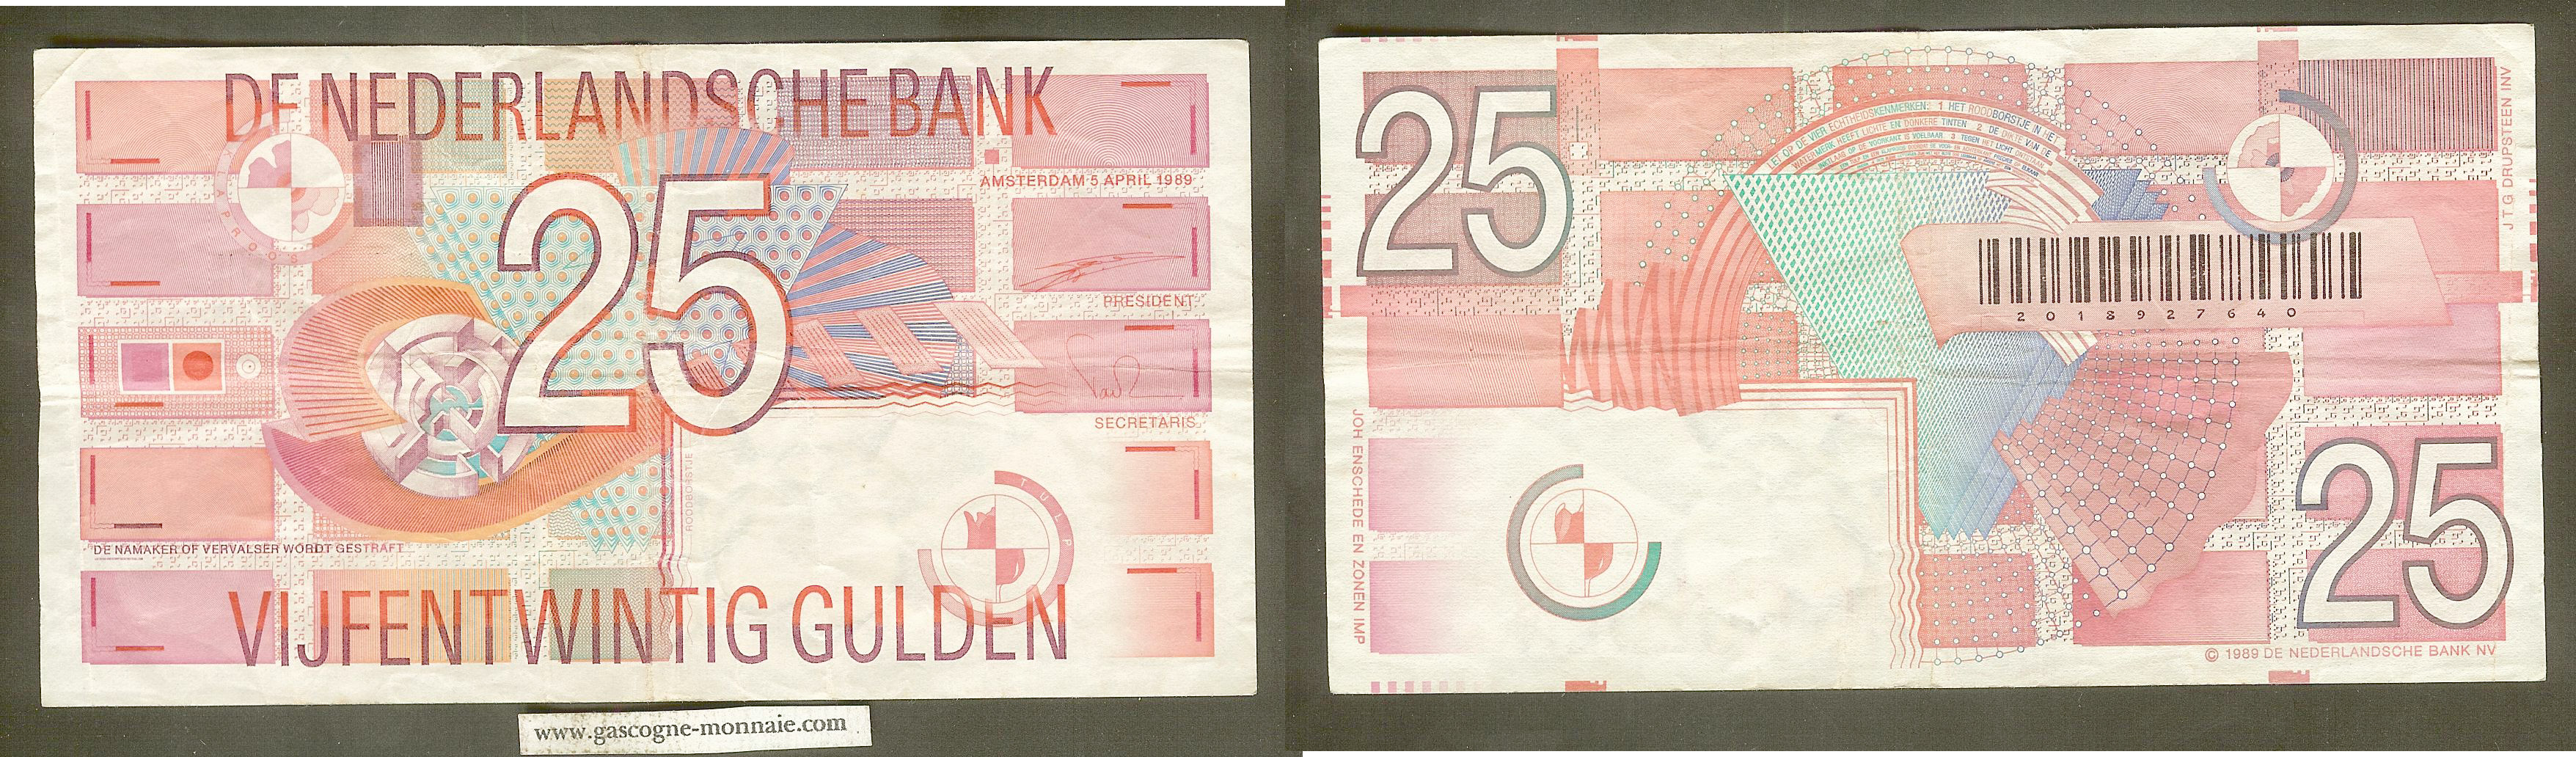 Netherlands 25 gulden 1989 VF